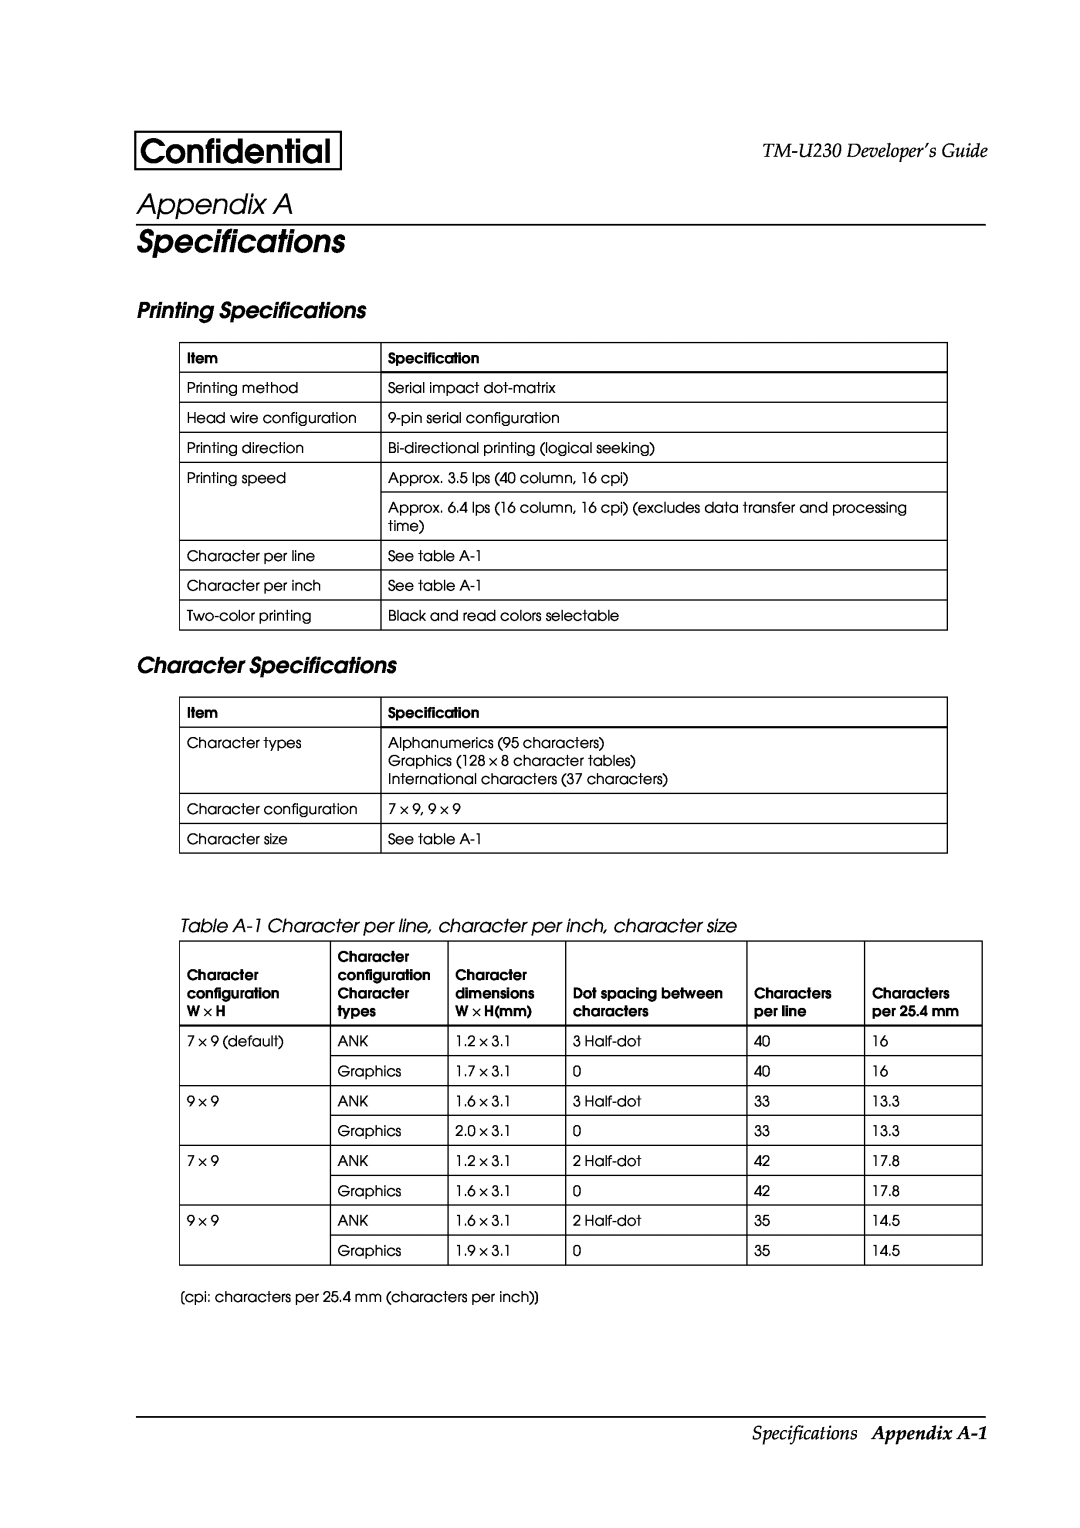 Epson U230 manual Printing Specifications, Character Specifications, Specifications Appendix A-1, Confidential 